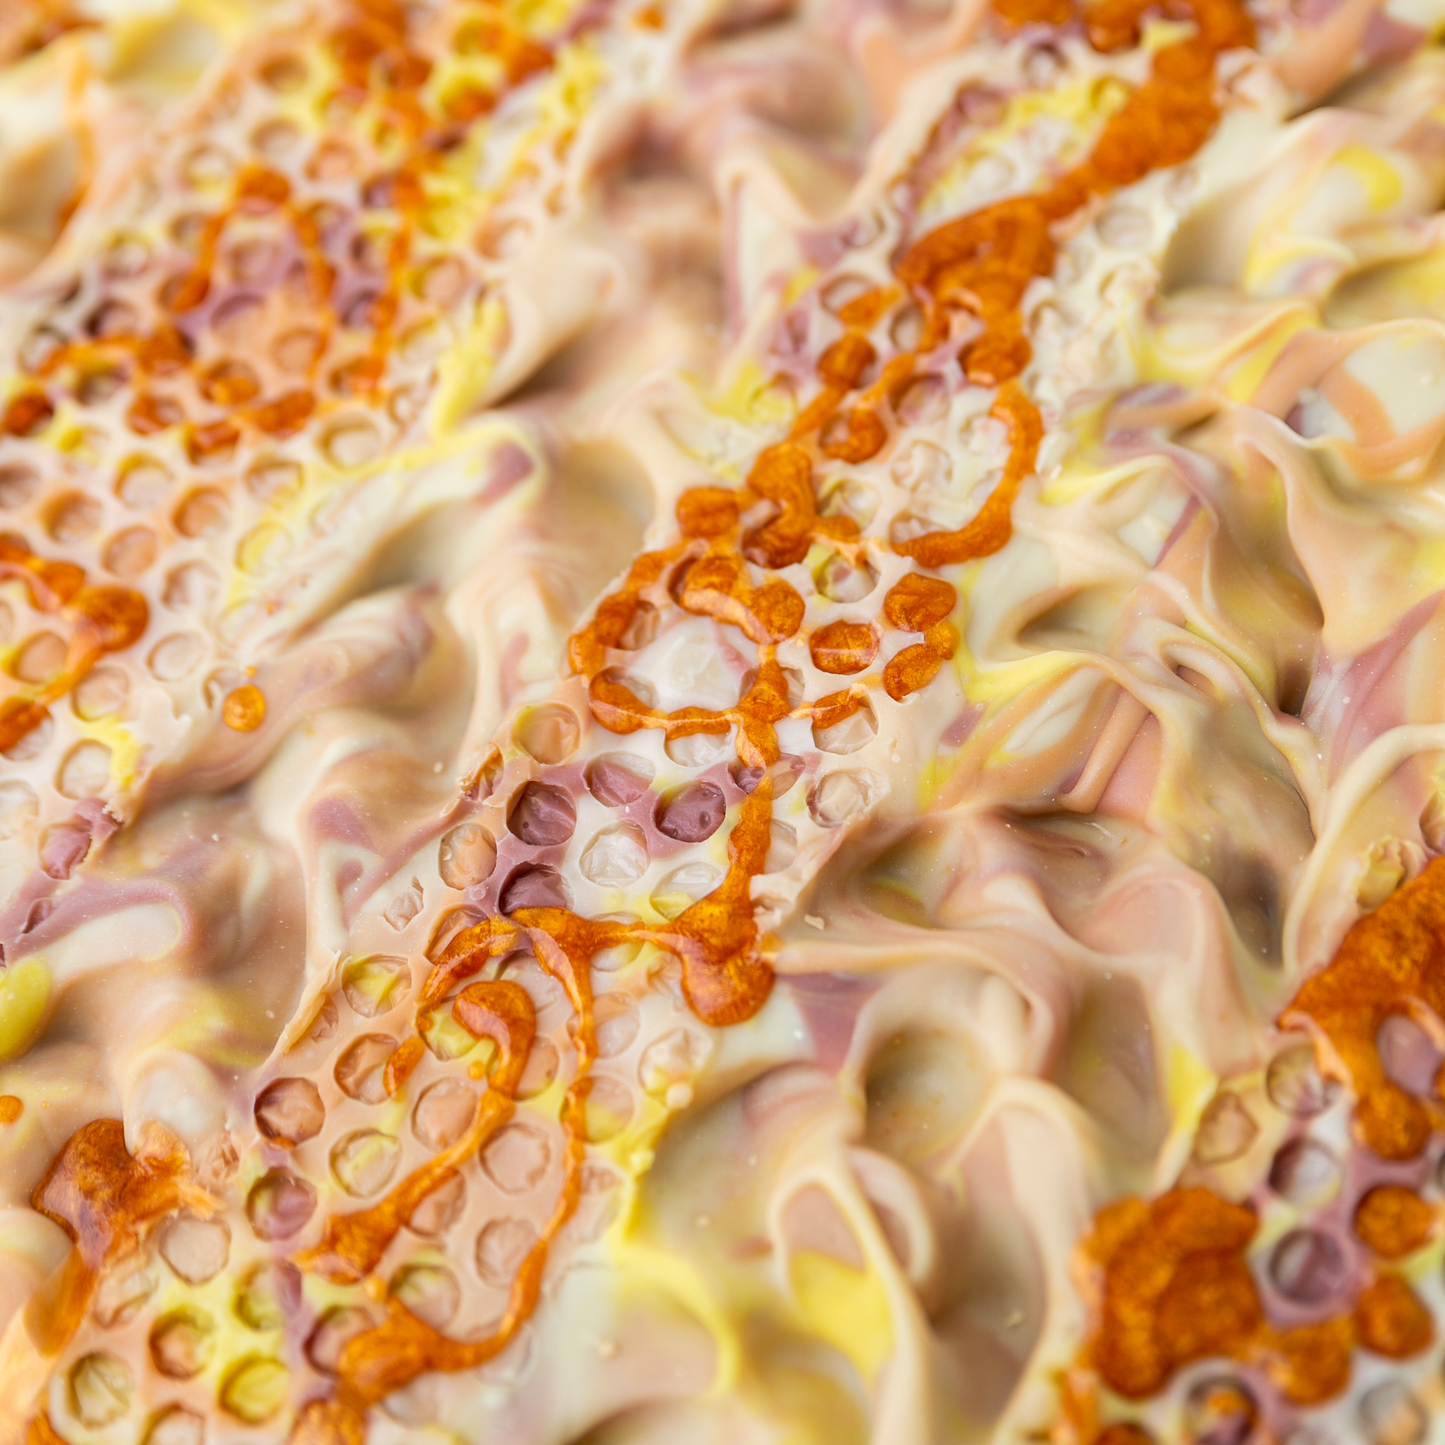 Thistlemeadow Market (Honey and Incense) Artisan Soap